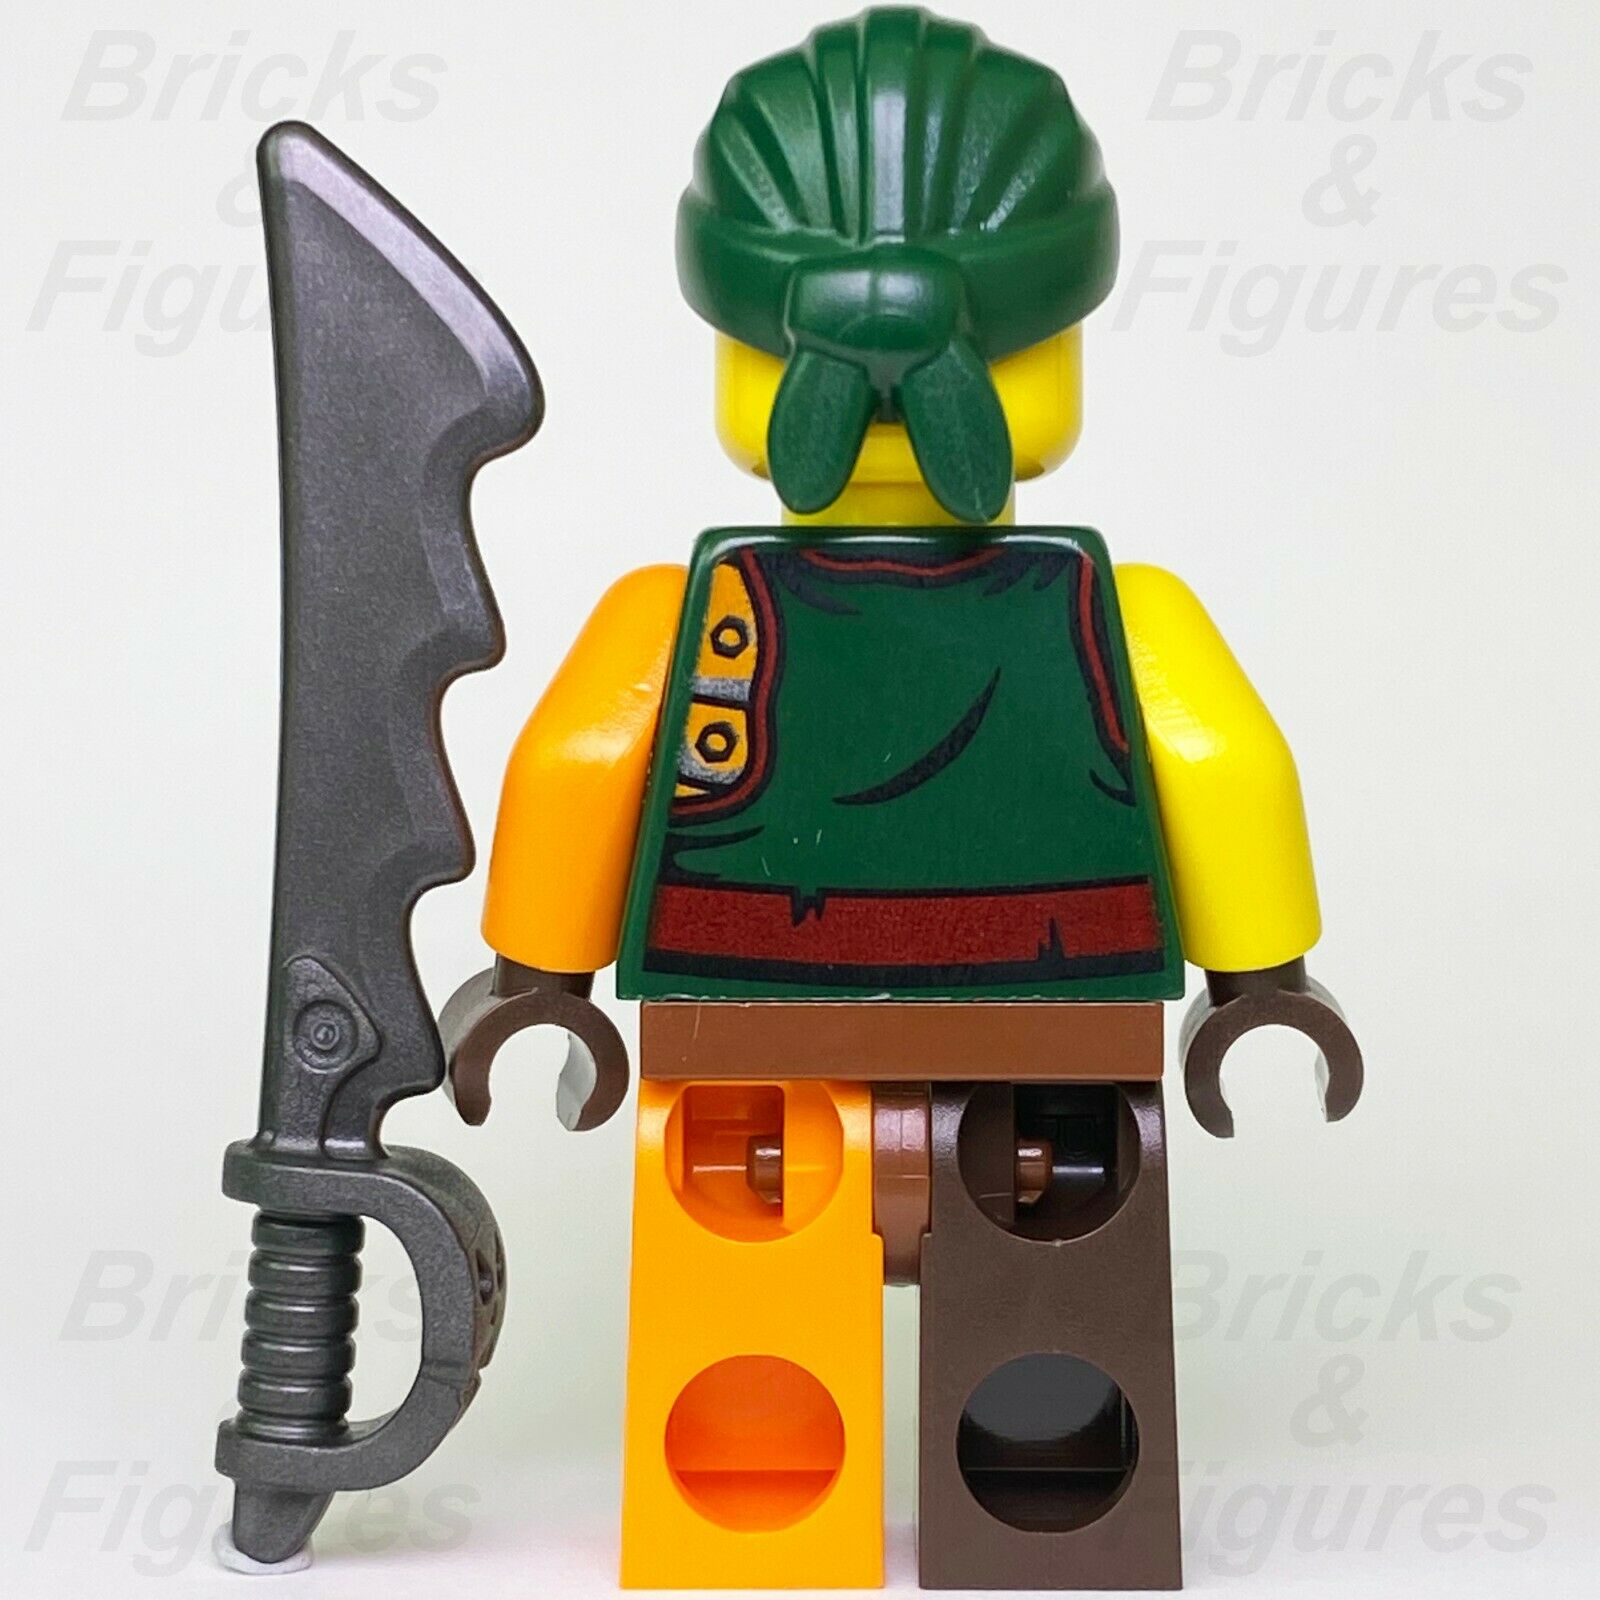 New Ninjago LEGO Sqiffy Pirate with Sword Skybound Minifigure 70604 70594 - Bricks & Figures